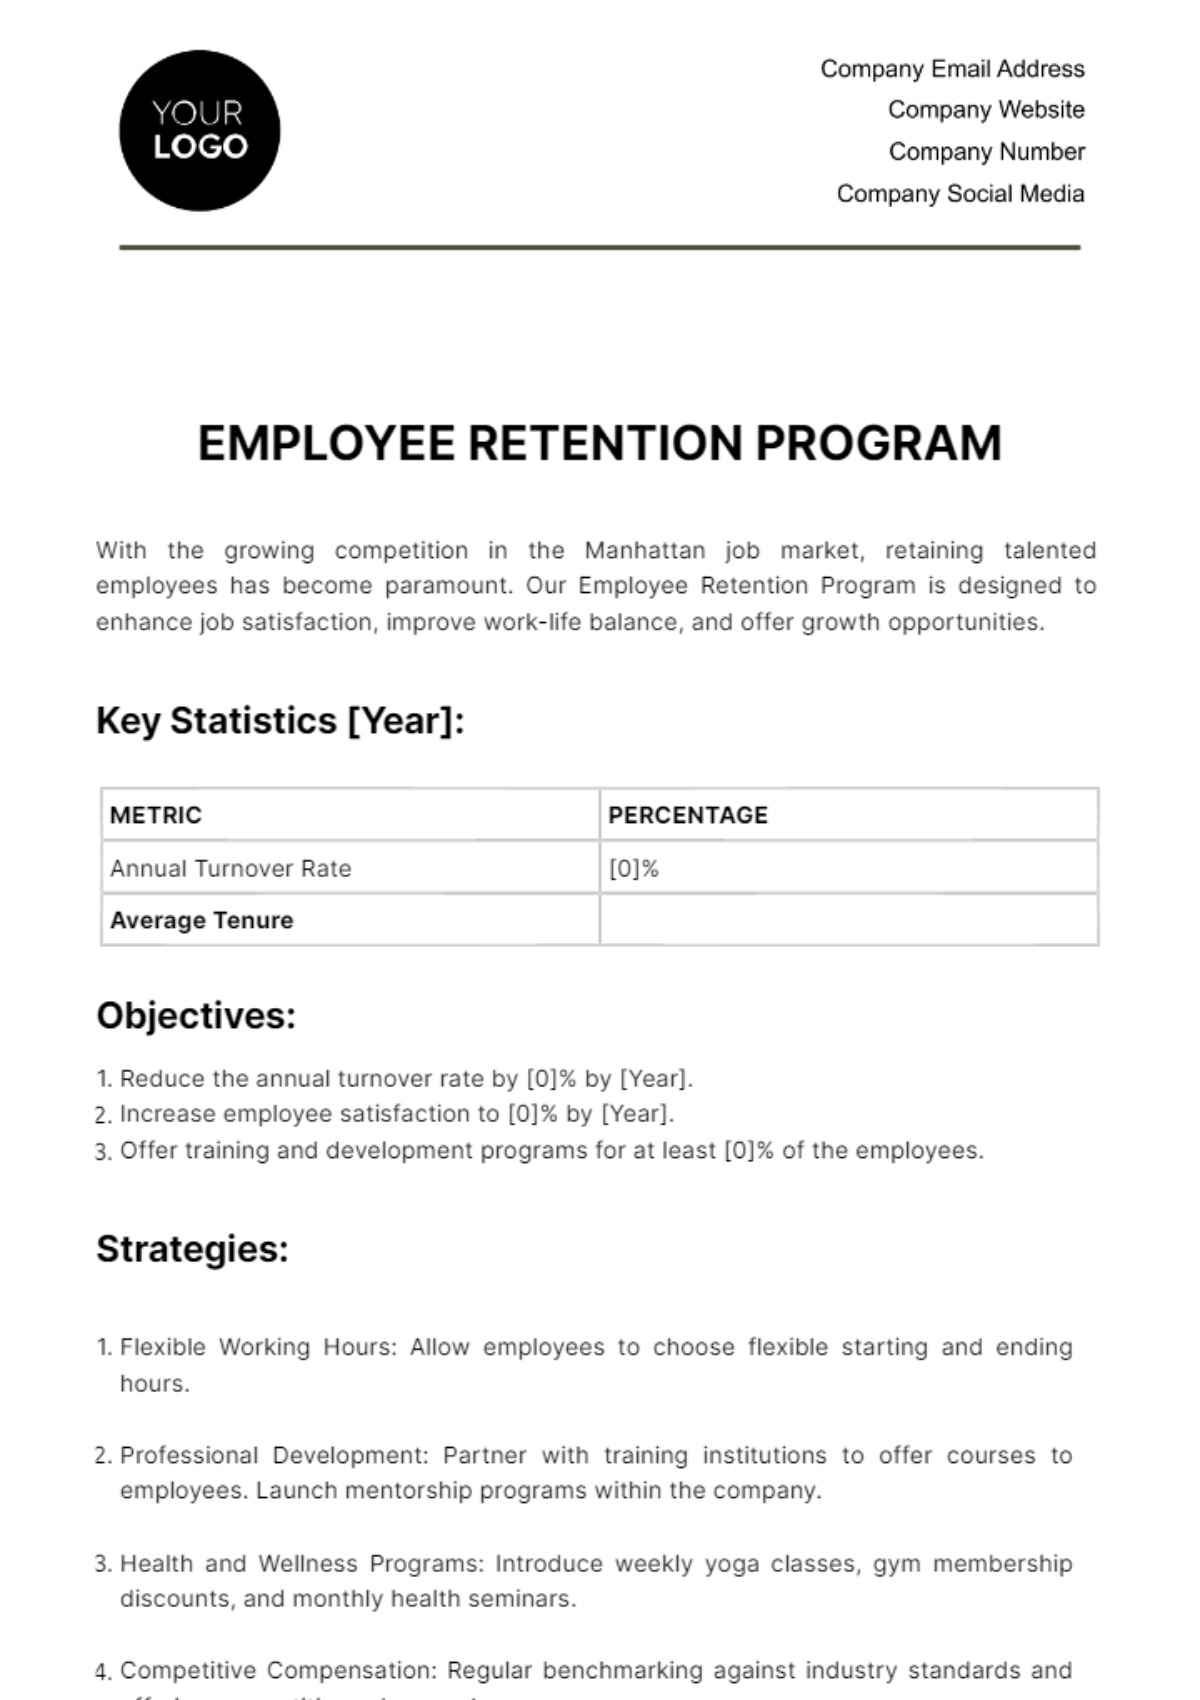 Employee Retention Program HR Template